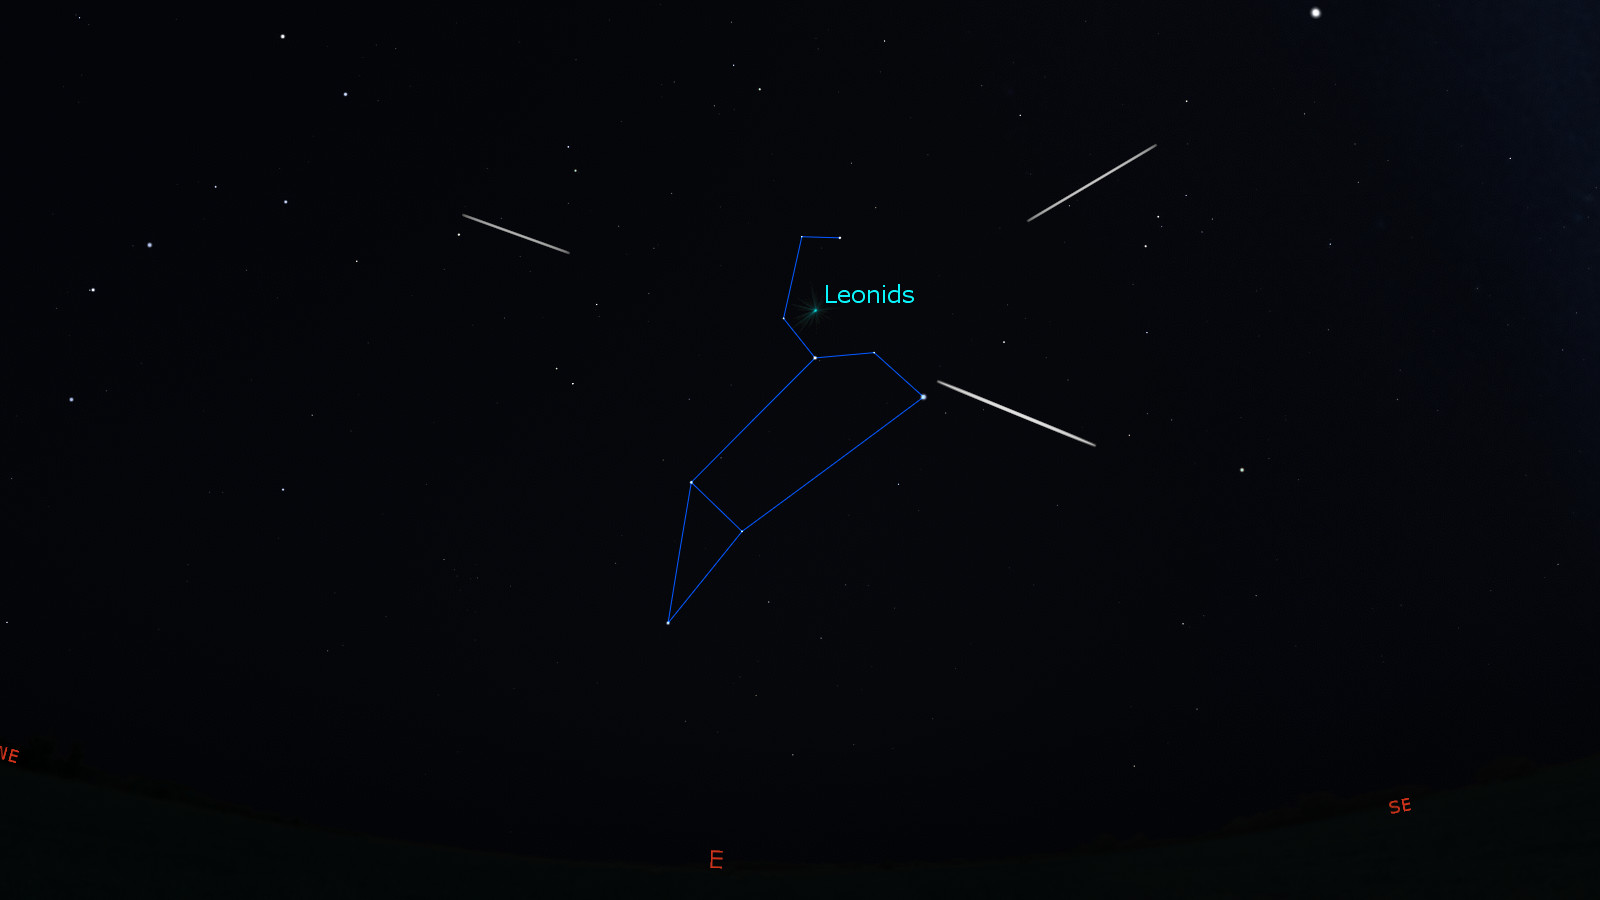 11-17 - Leonids meteor shower